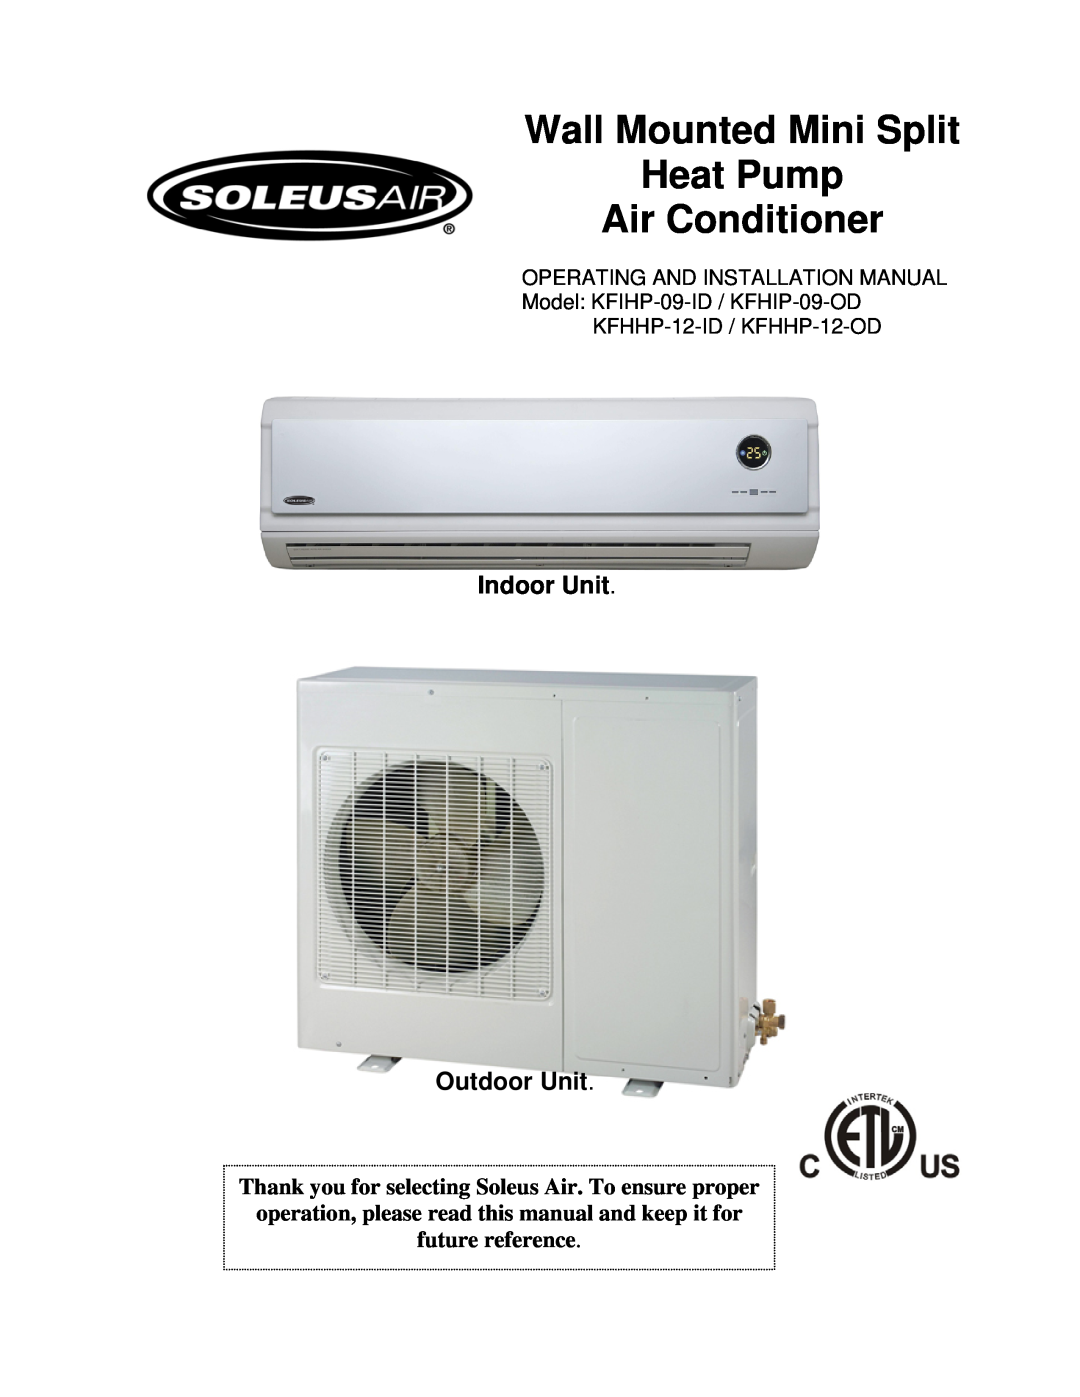 Soleus Air KFHIP-09-OD installation manual Indoor Unit Outdoor Unit, Wall Mounted Mini Split Heat Pump Air Conditioner 